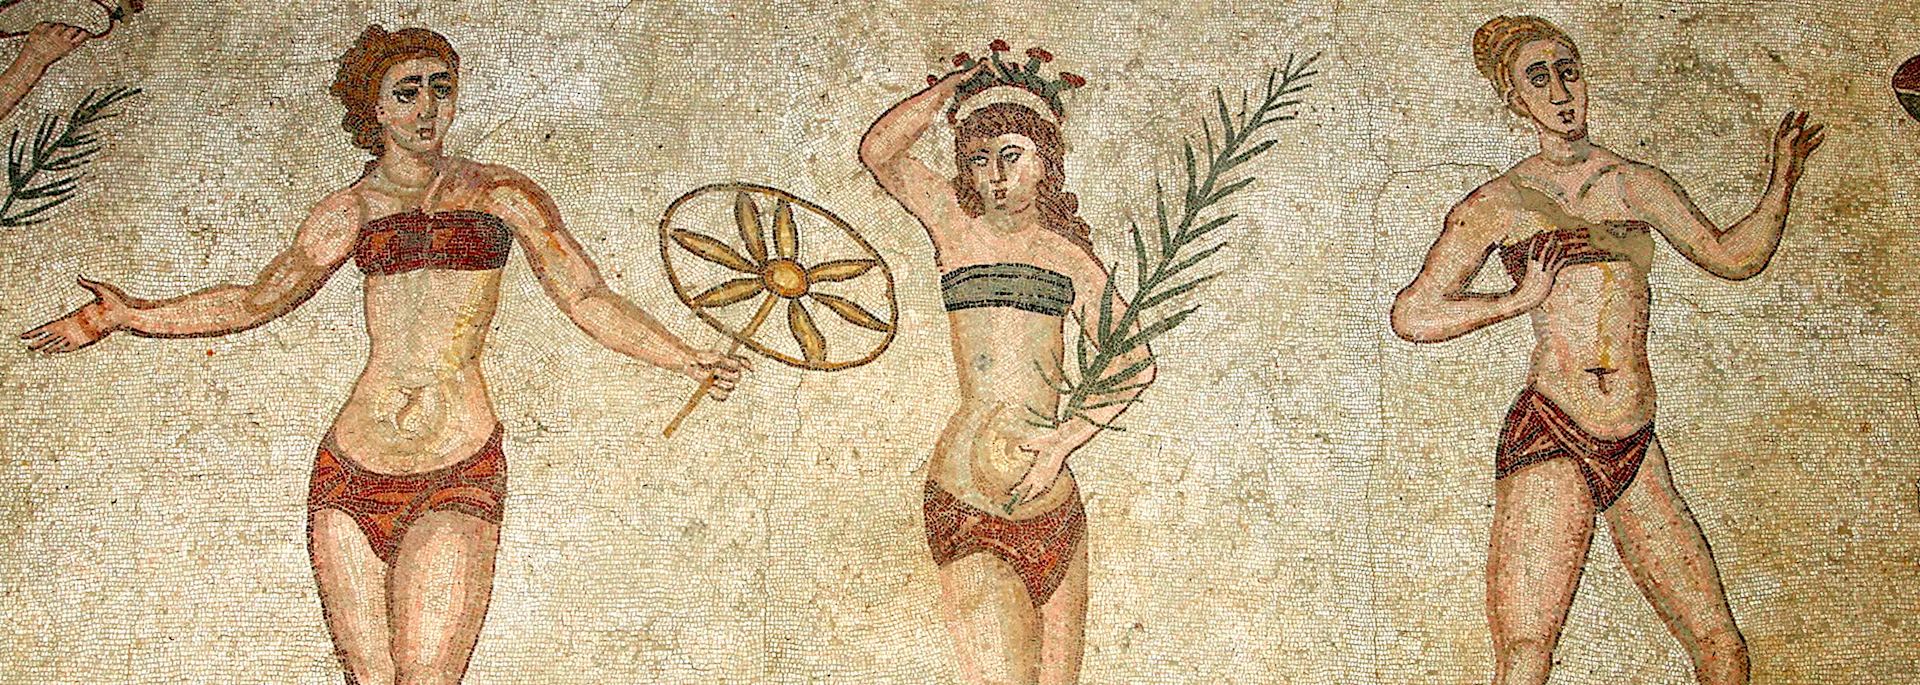 Roman mosaic of women in bikinis, Villa Romana Casale